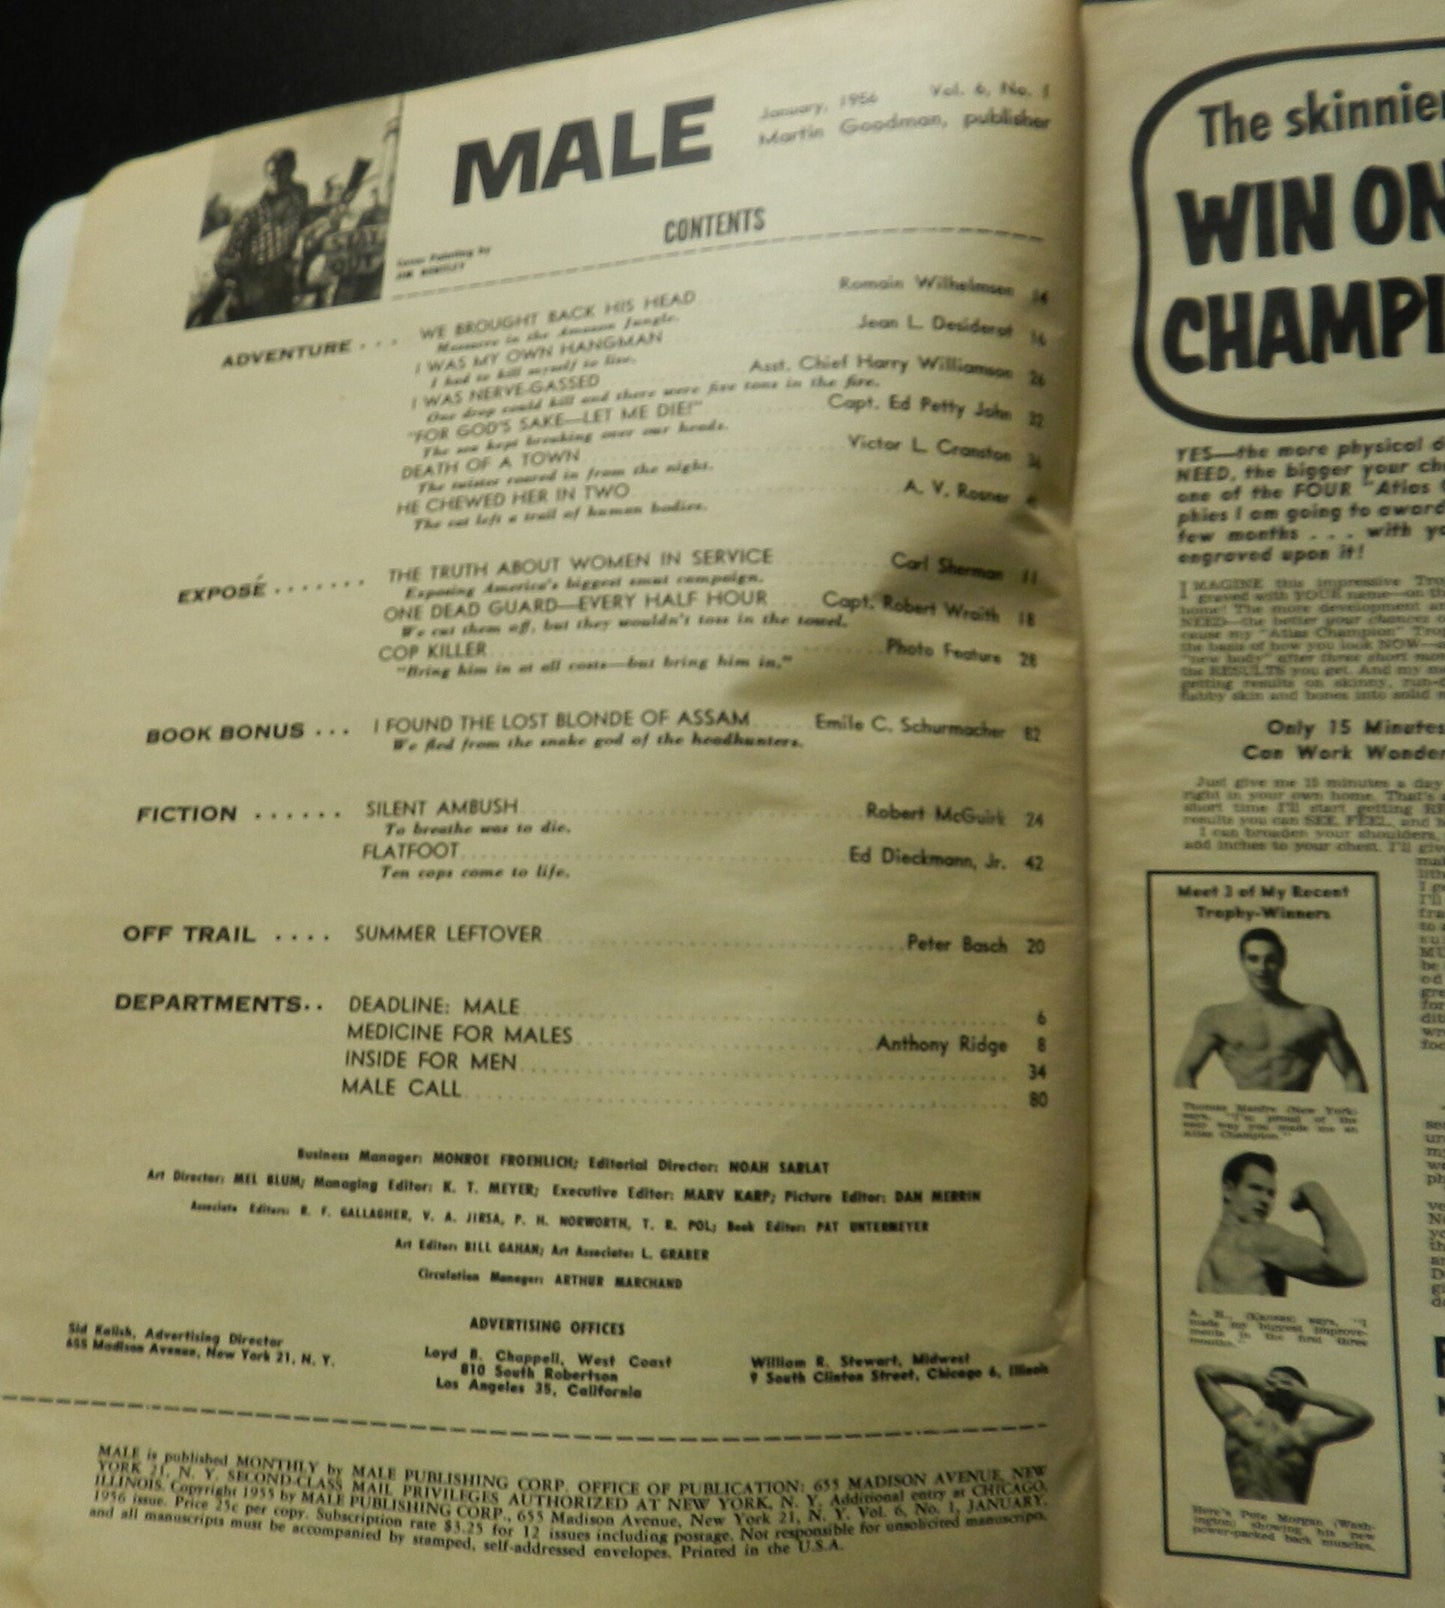 1956 Vintage "Male" Magazine - January 1956  Adventure - Expose - Fiction - Male Call